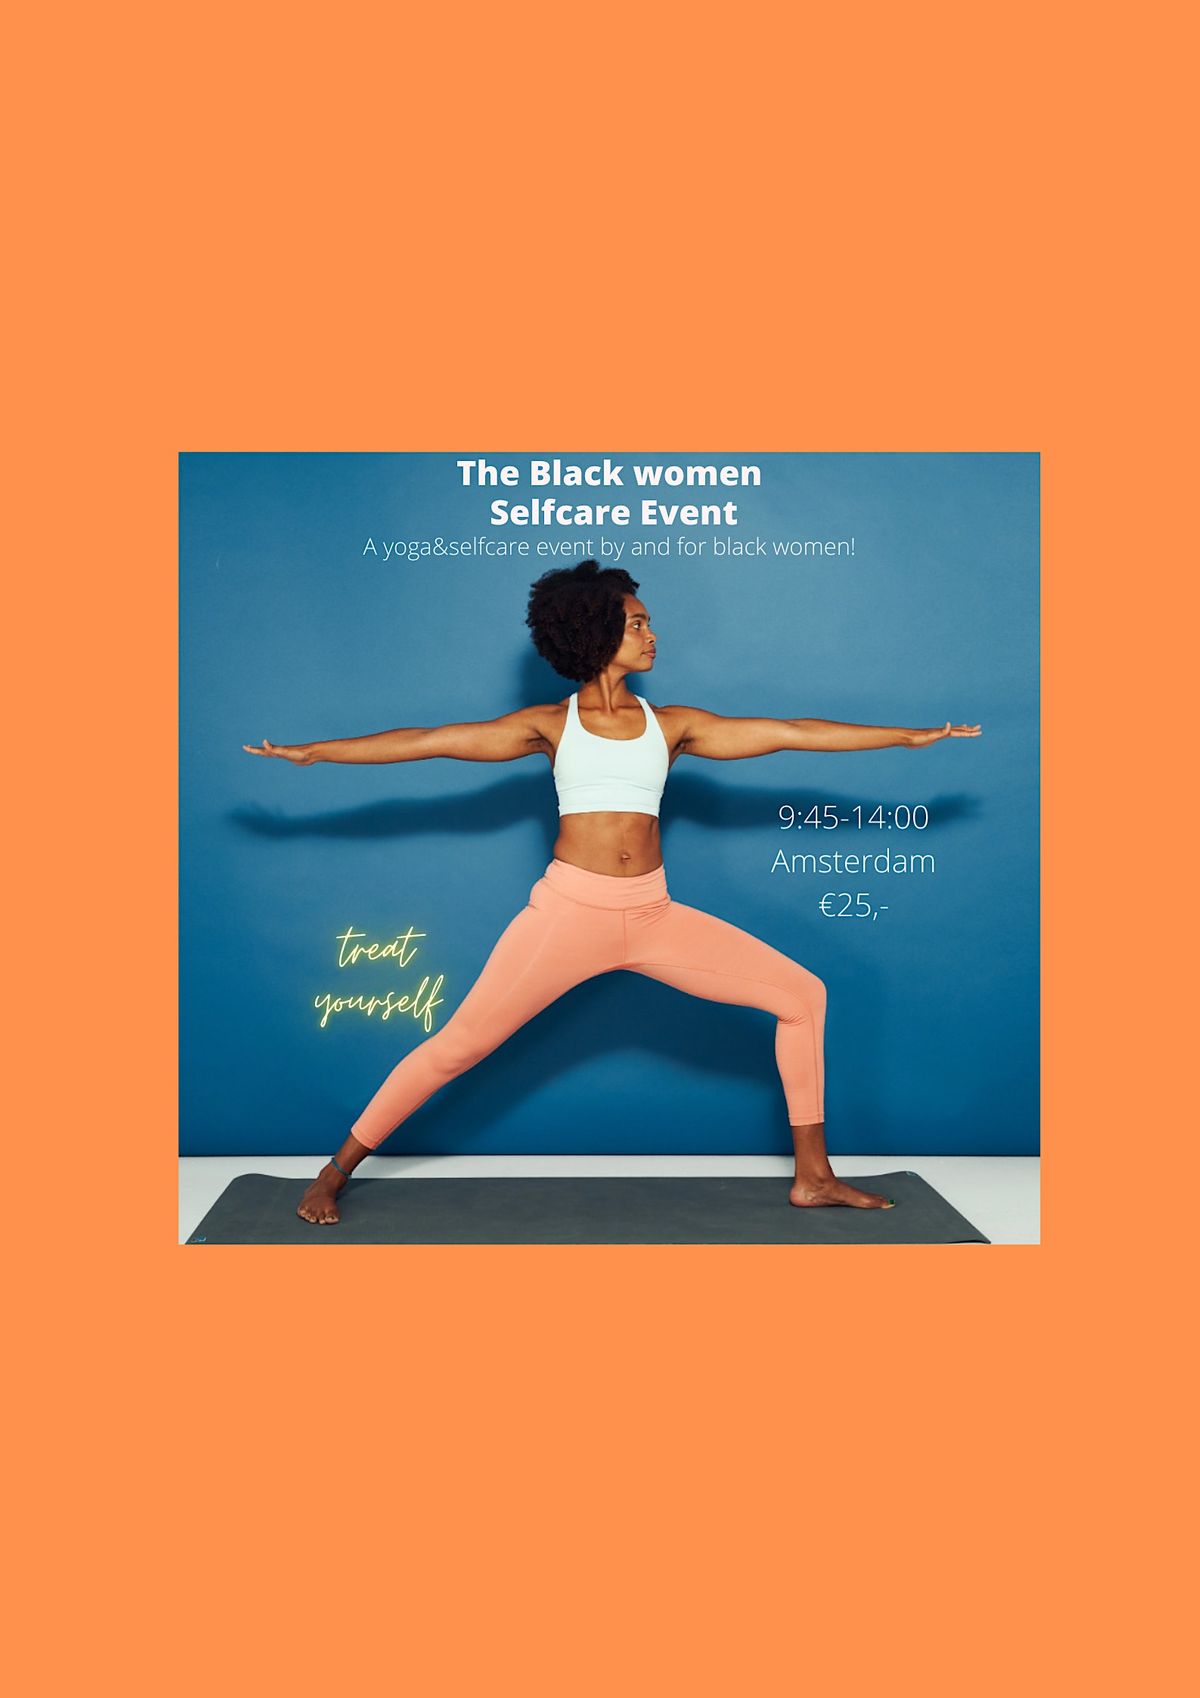 The Black Women Yoga Event